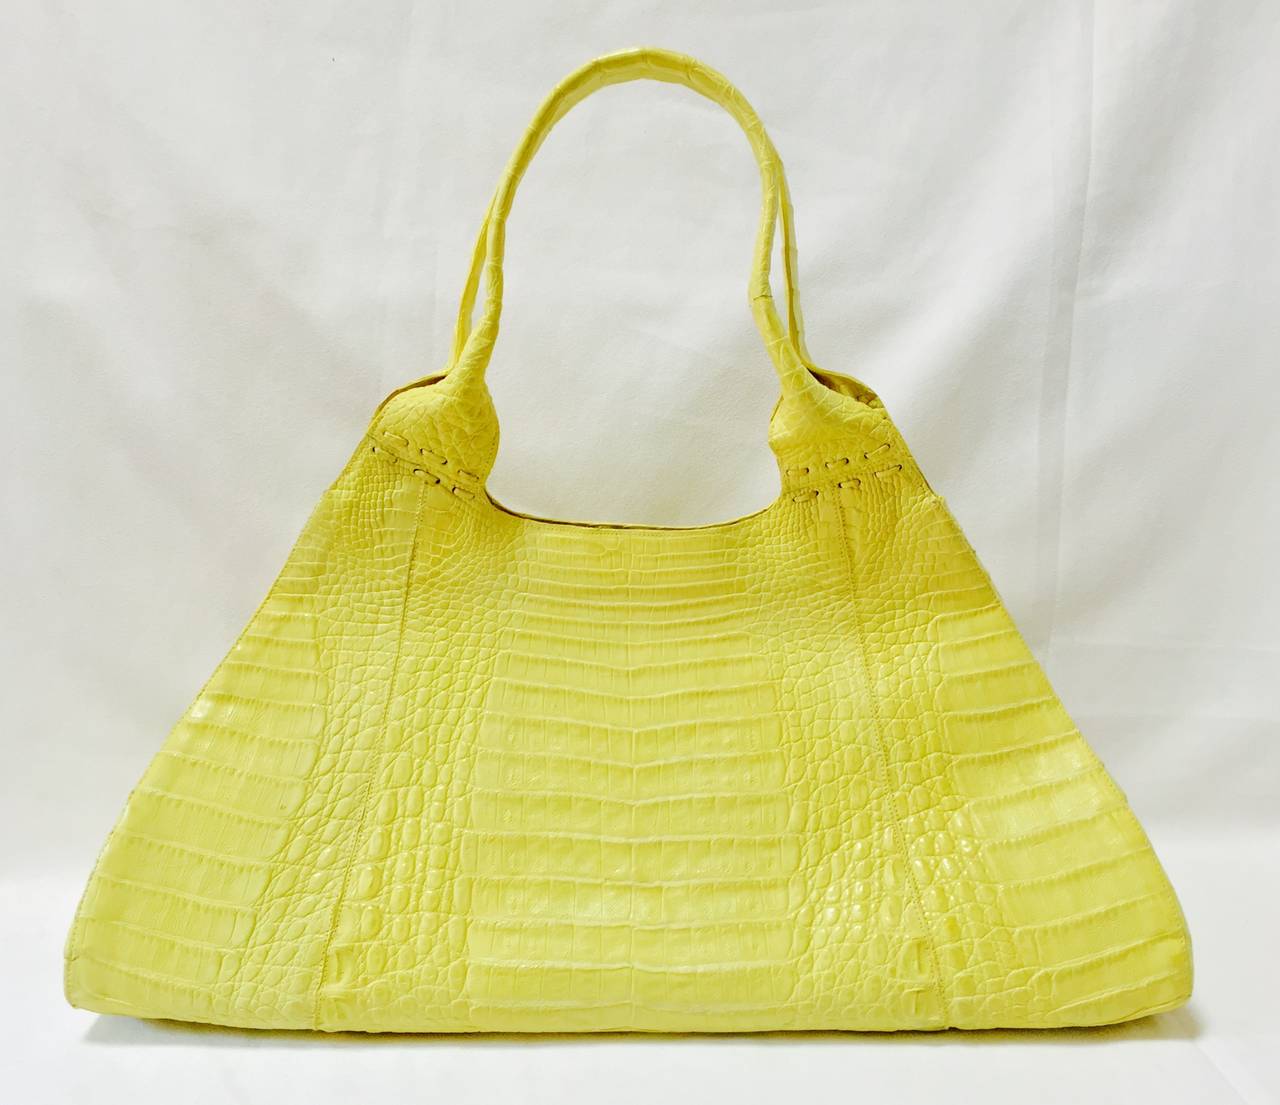 Exquisite Nancy Gonzalez Citrus Yellow Crocodile Shoulder Bag In Excellent Condition For Sale In Palm Beach, FL